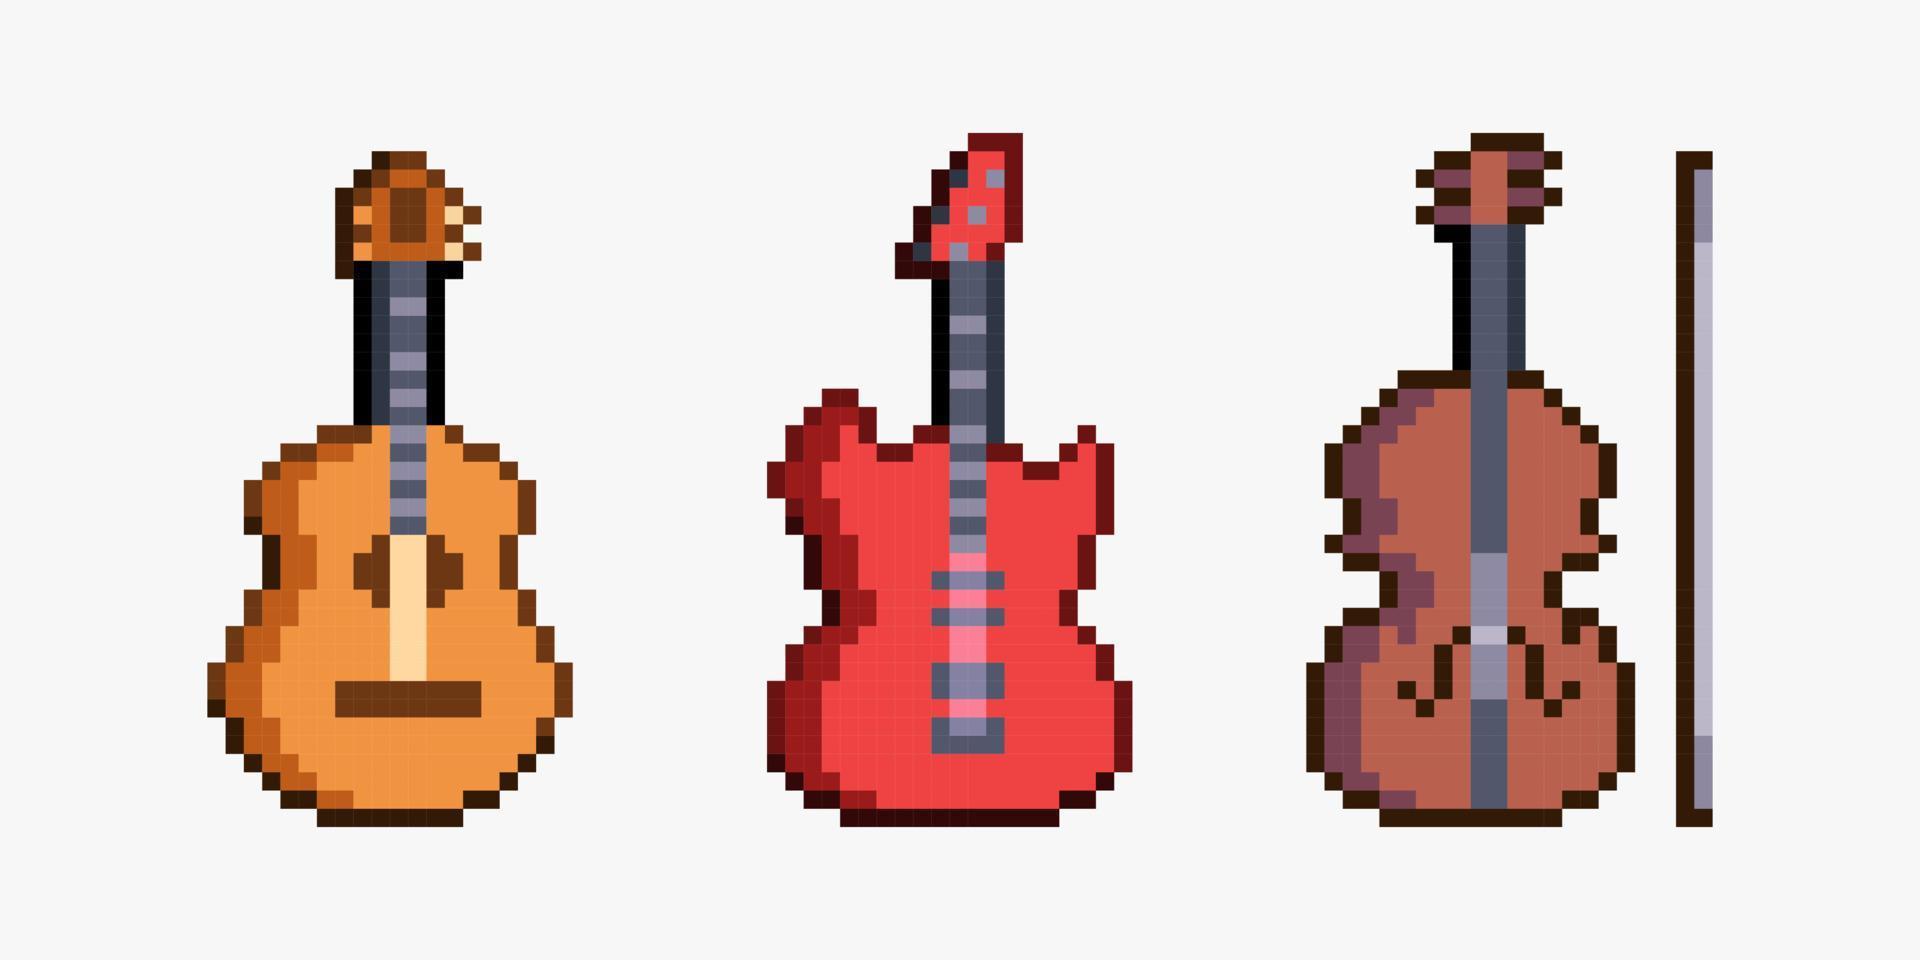 Music instruments in pixel art style vector